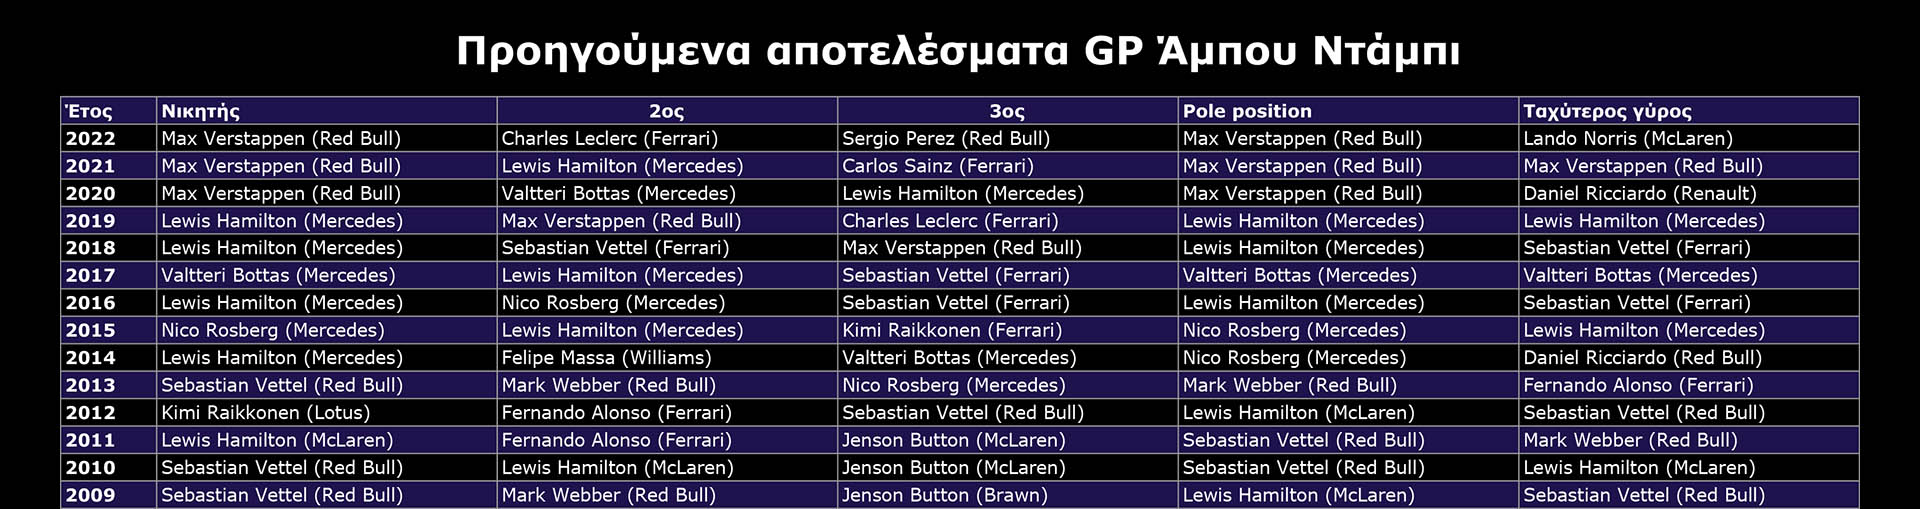 F1 - GP Άμπου Ντάμπι, προηγούμενα αποτελέσματα